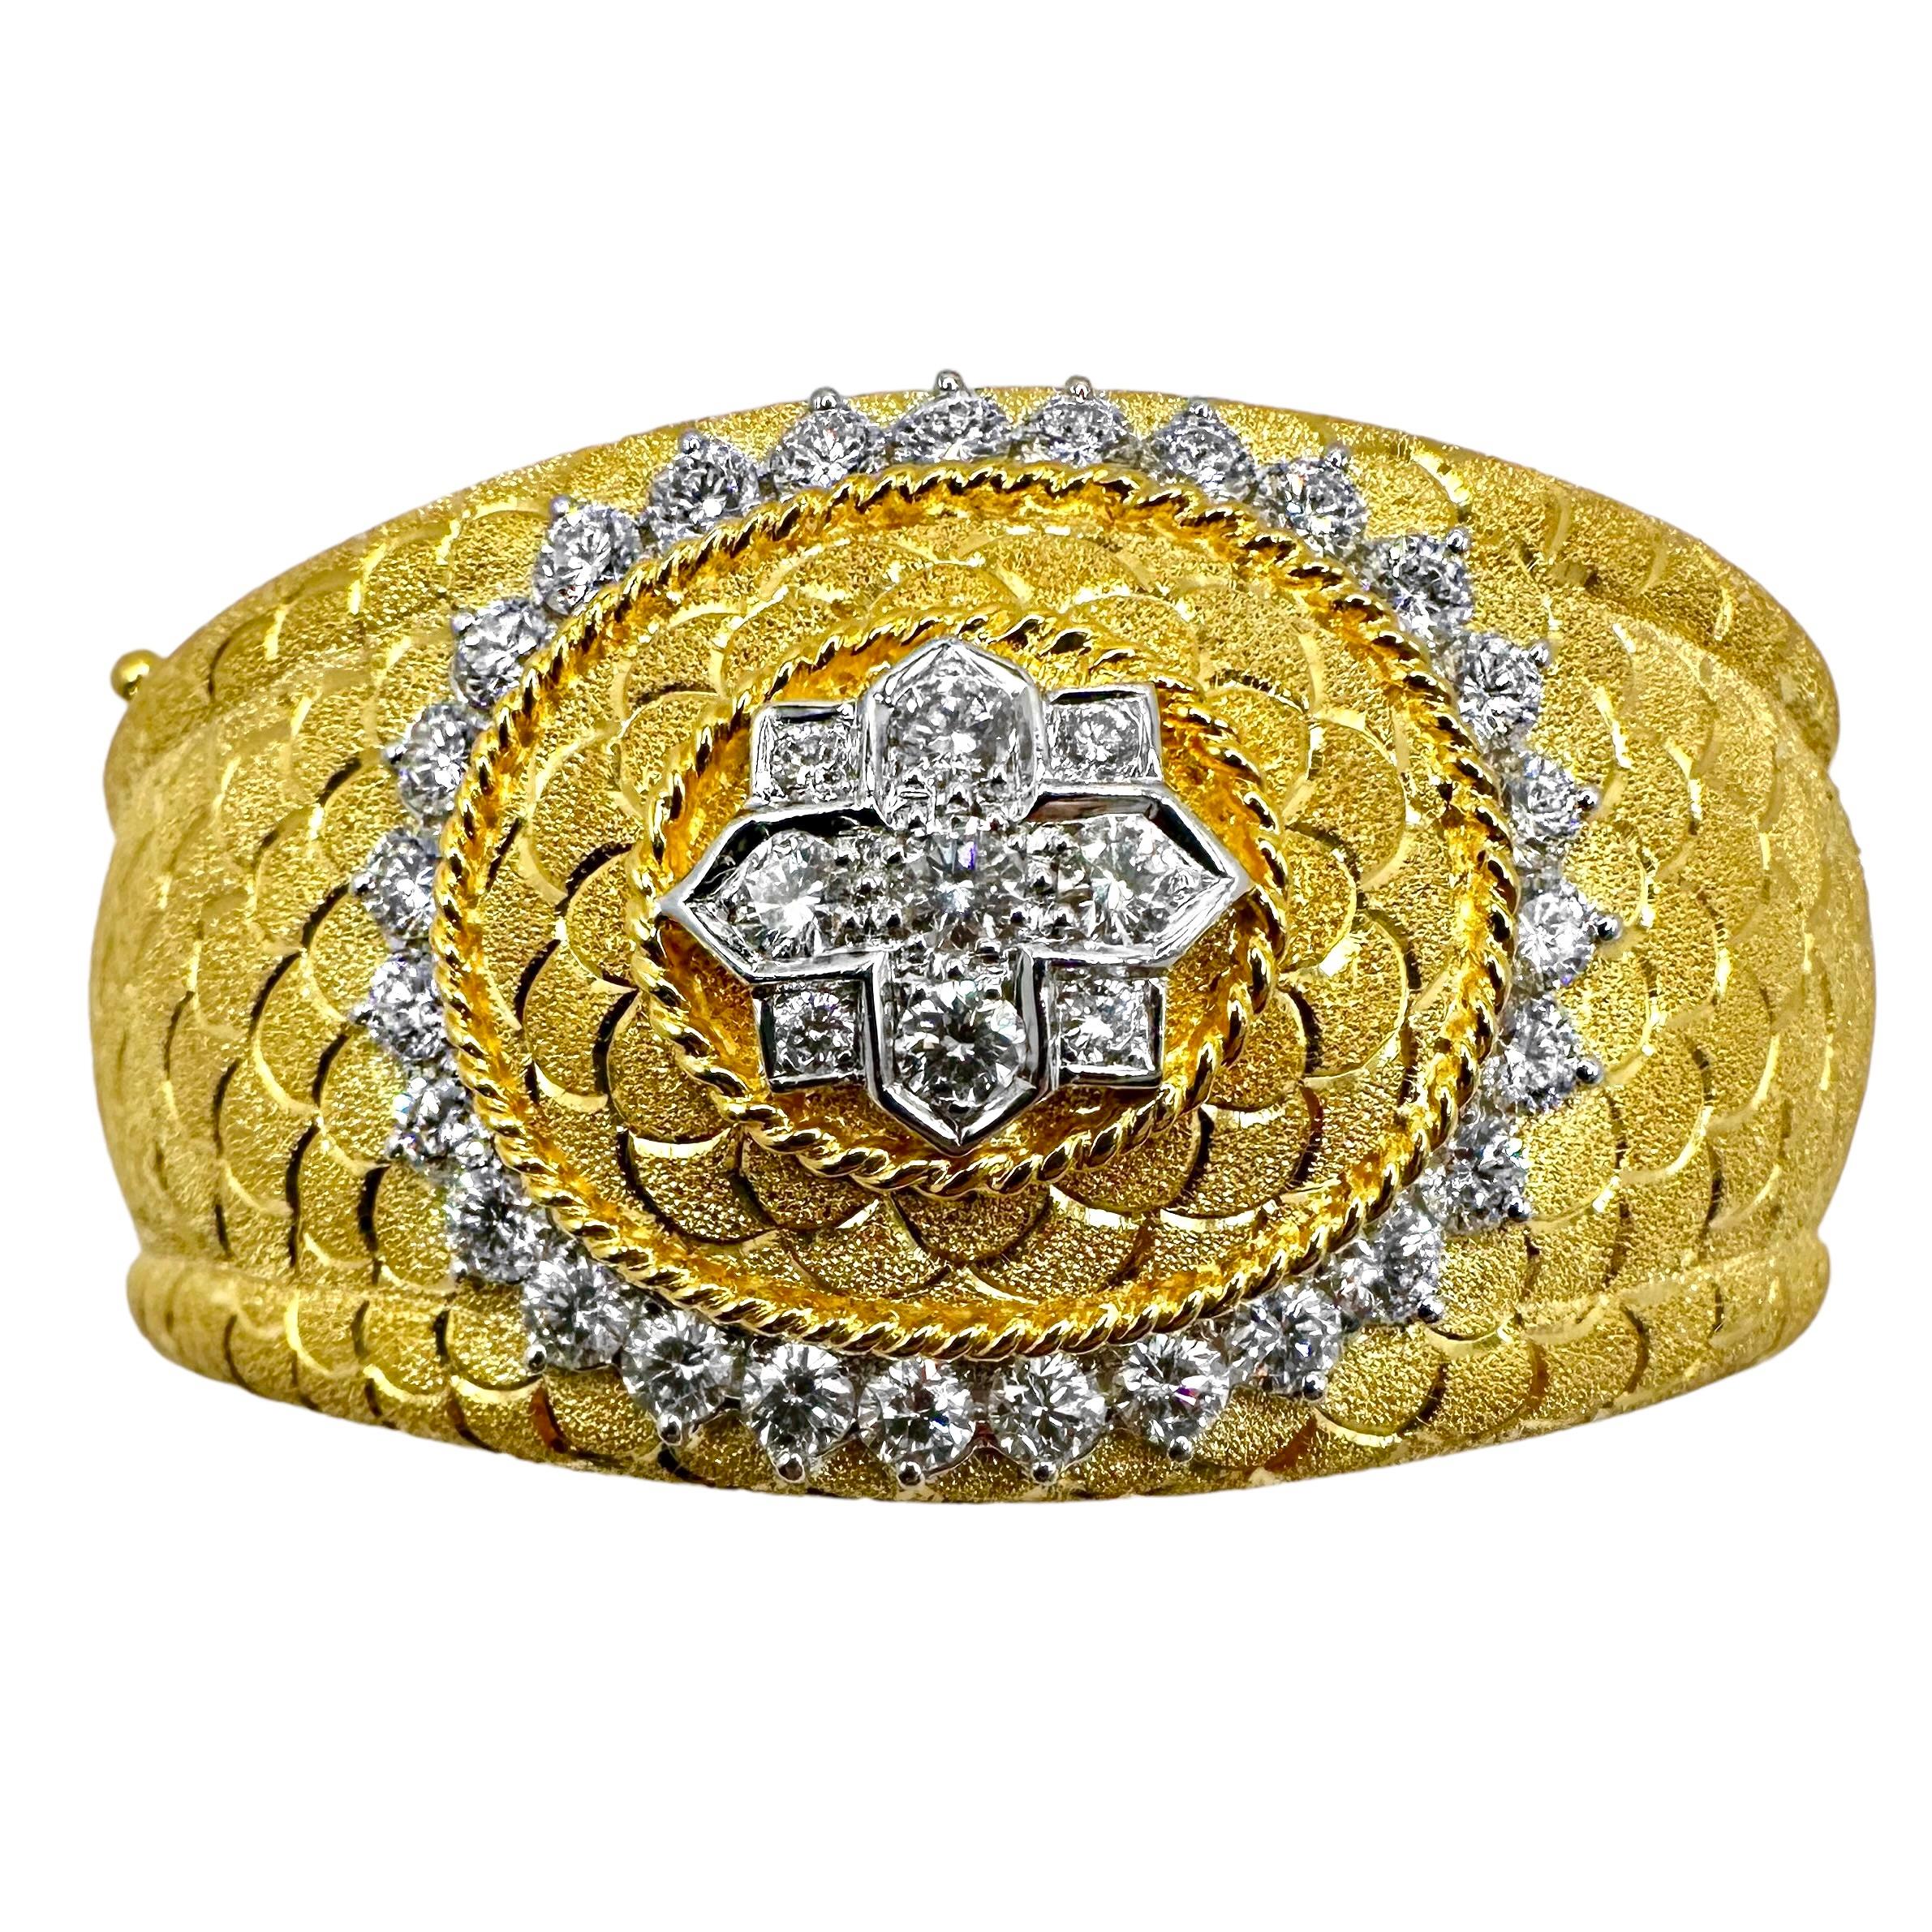 Regal Design, Diamond & Florentine Finish 18K Gold Cuff Bracelet 1.25 Inch Wide For Sale 3